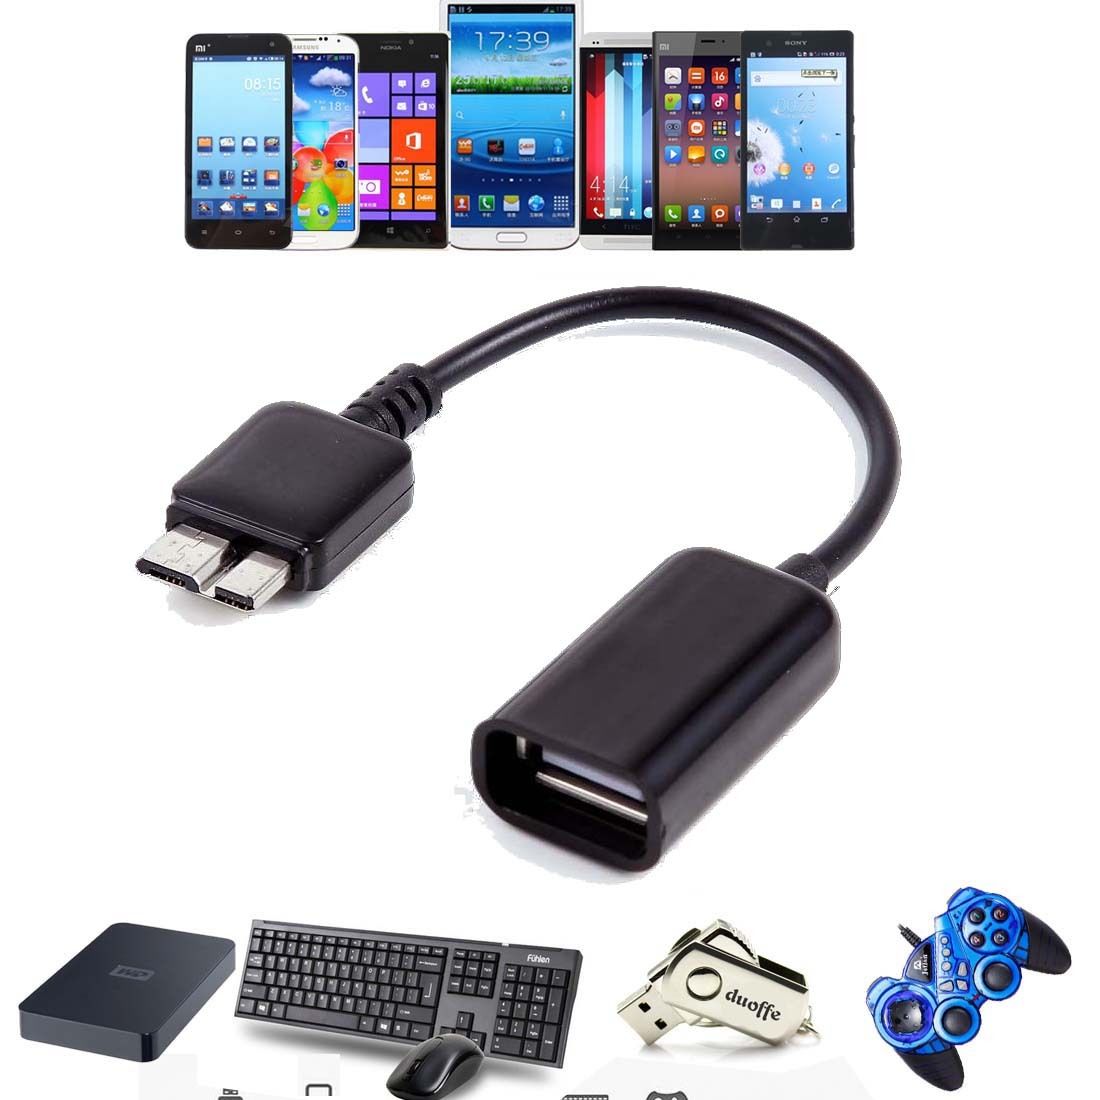 Premium USB3.0 OTG Host Cable Adapter Cord Voor Nokia Lumia 2520 levono thinkpad8 Samsung Galaxy Note 3 S5 i9600 G900